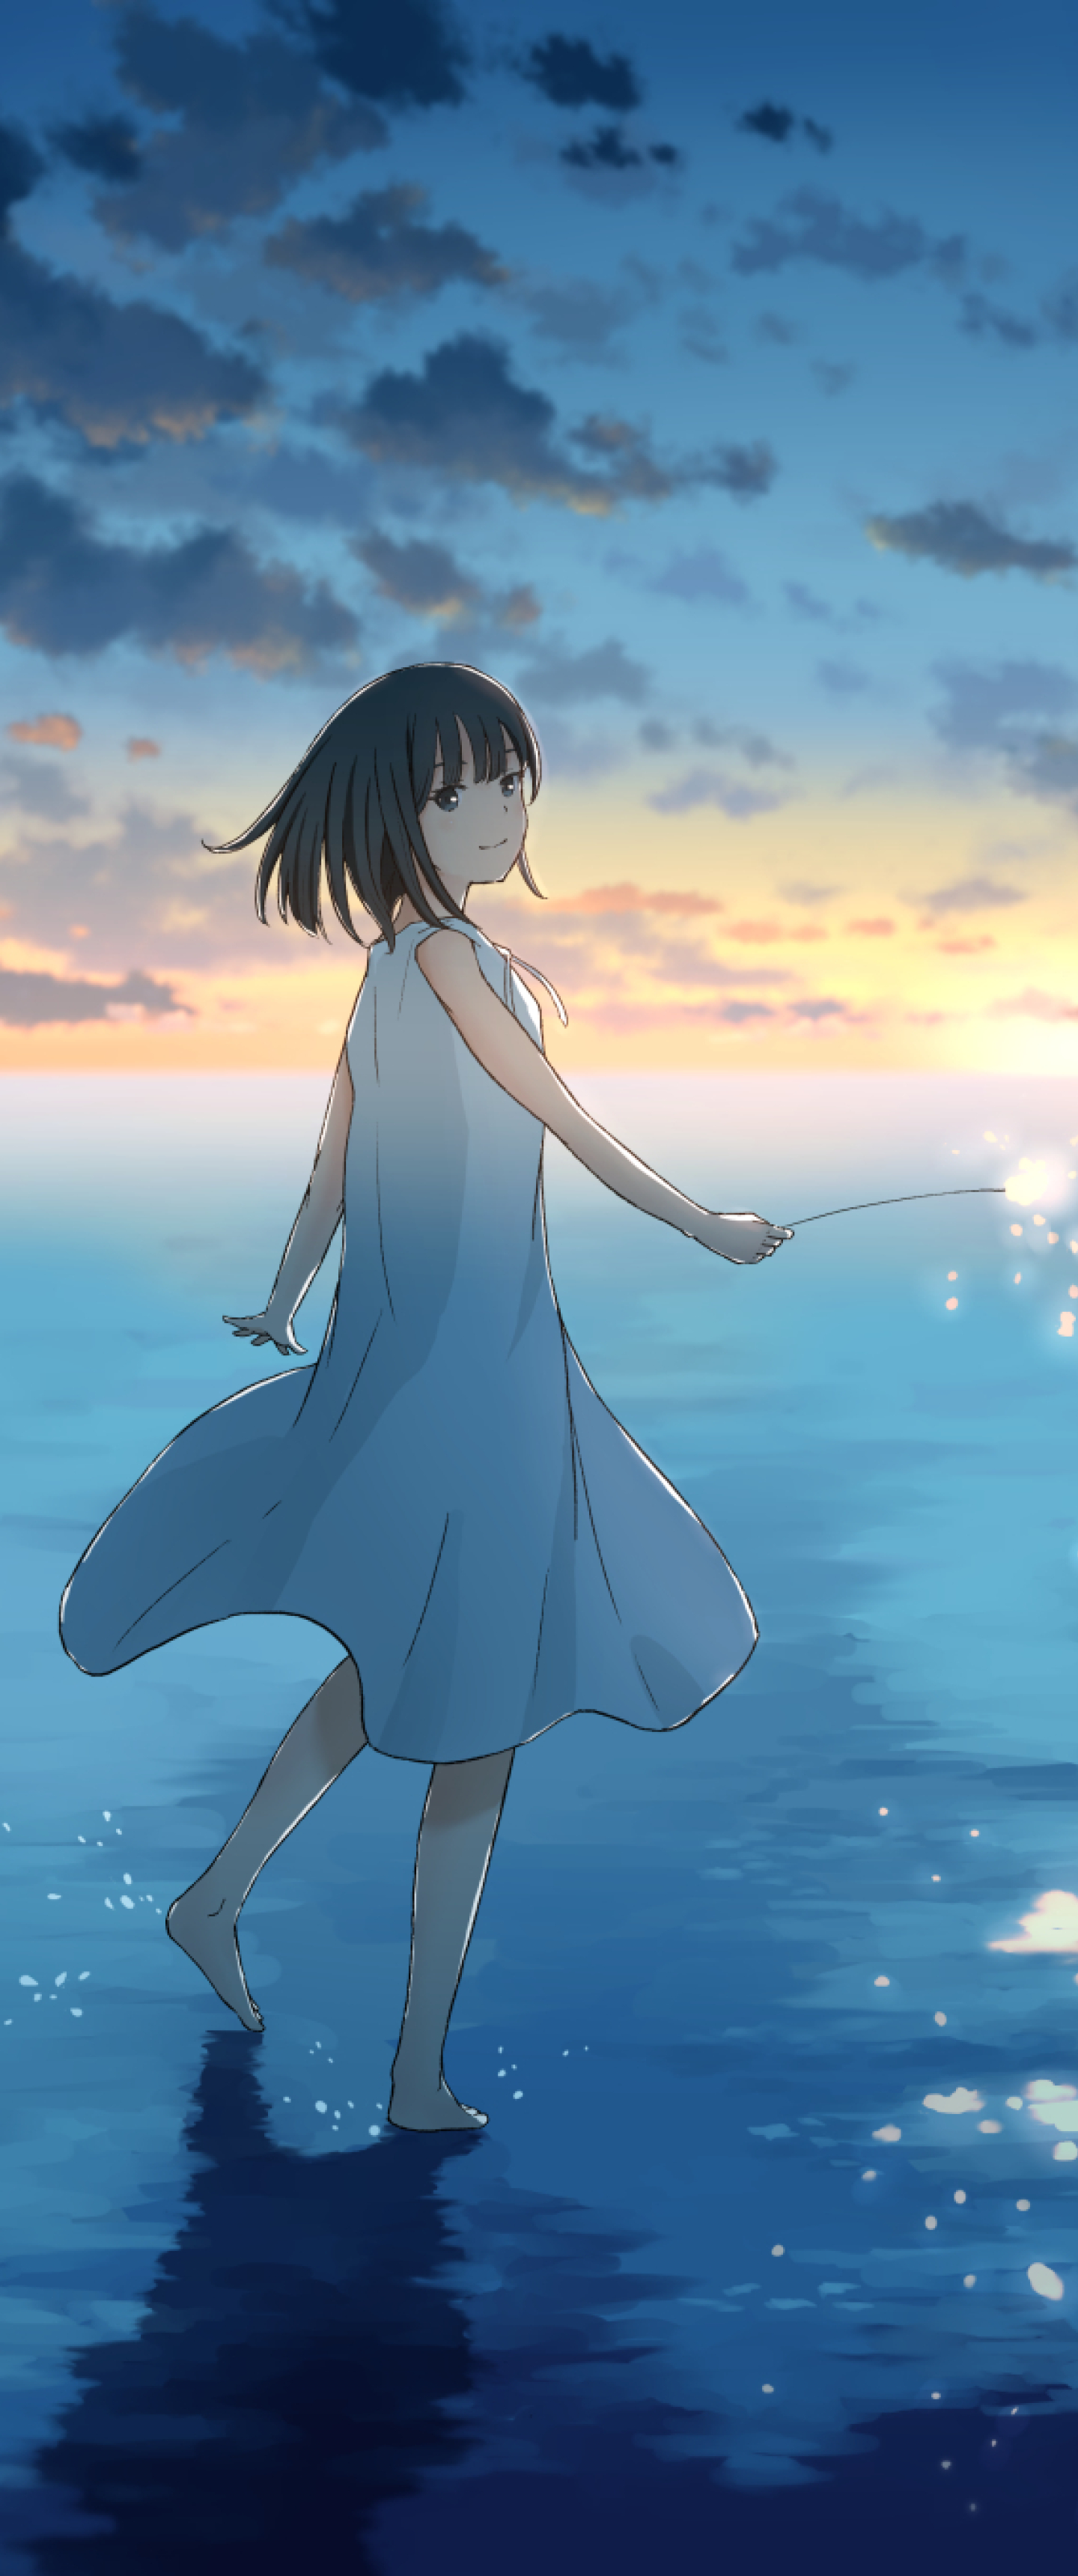 1440x3440 Cute Anime Girl Sunset Draw 1440x3440 Resolution Wallpaper ...